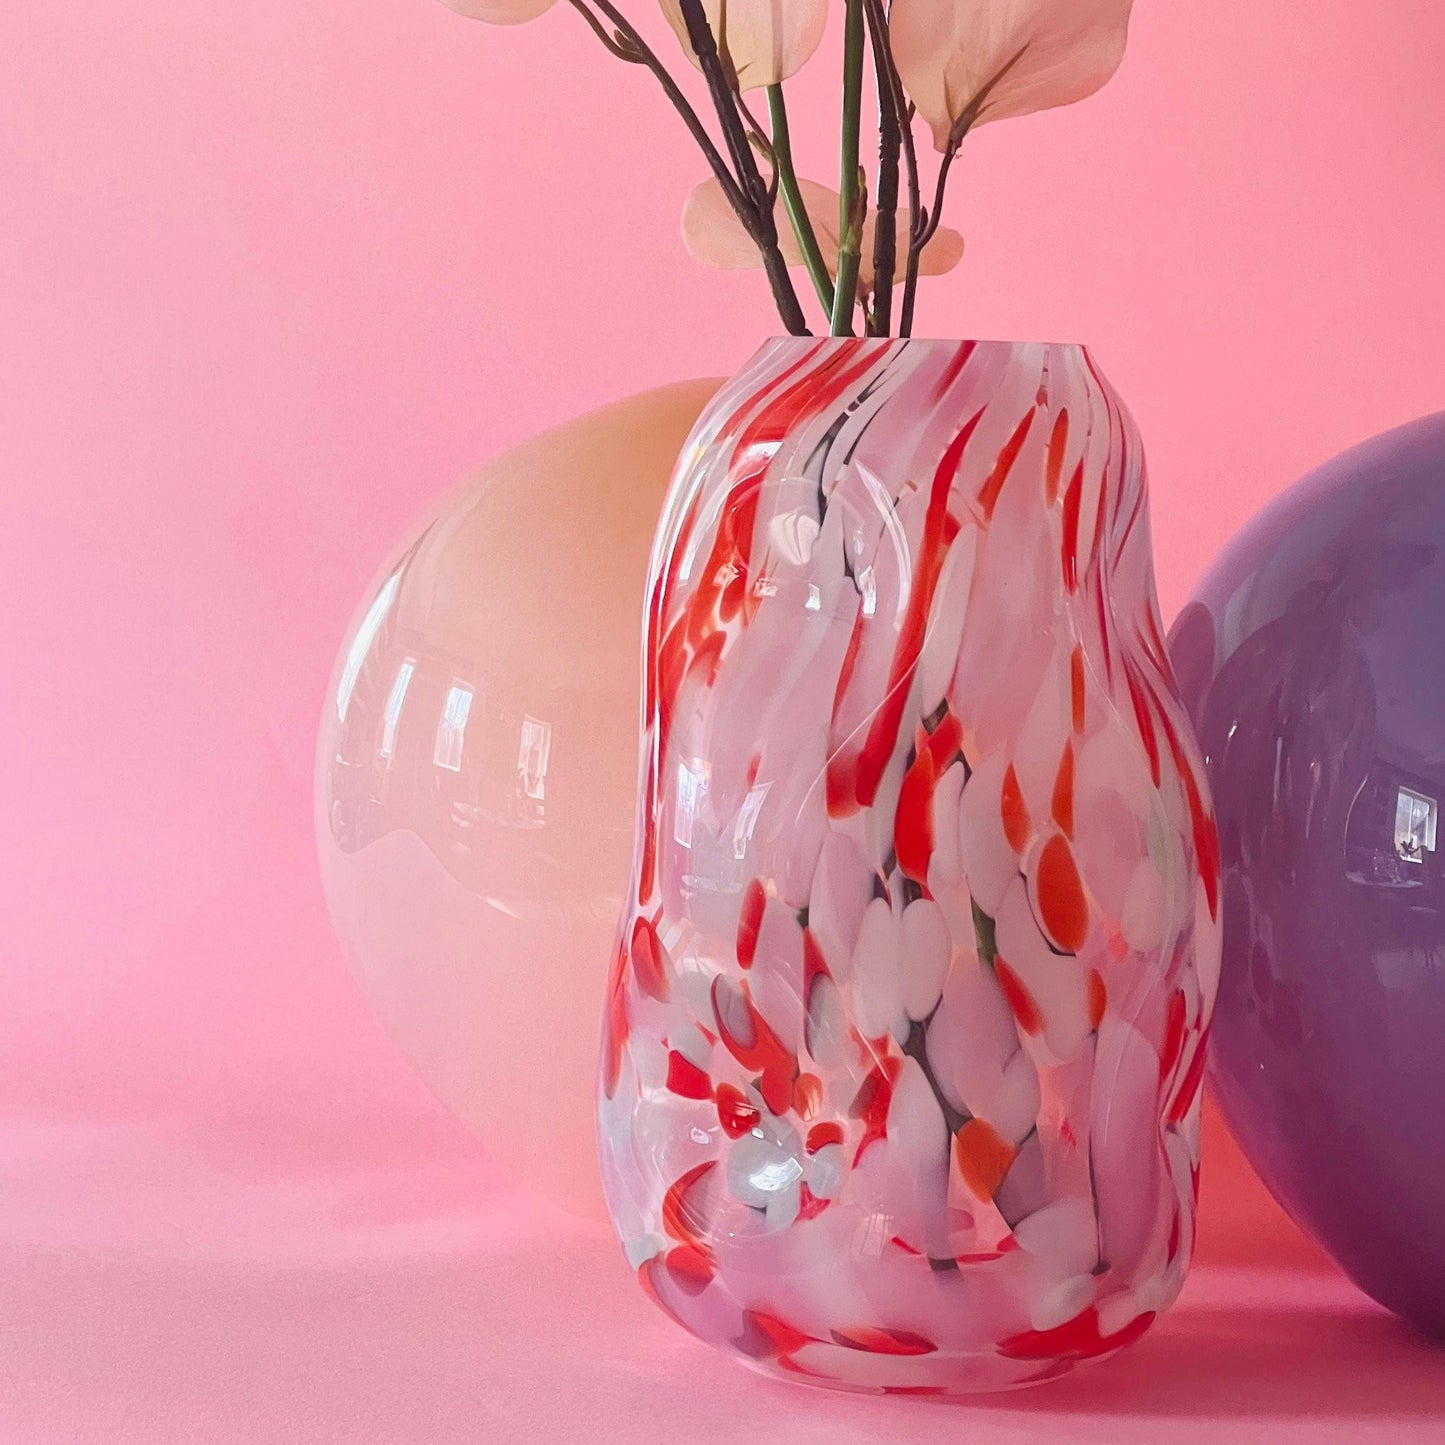 Bohemian glass vase - Mandarin Confetti